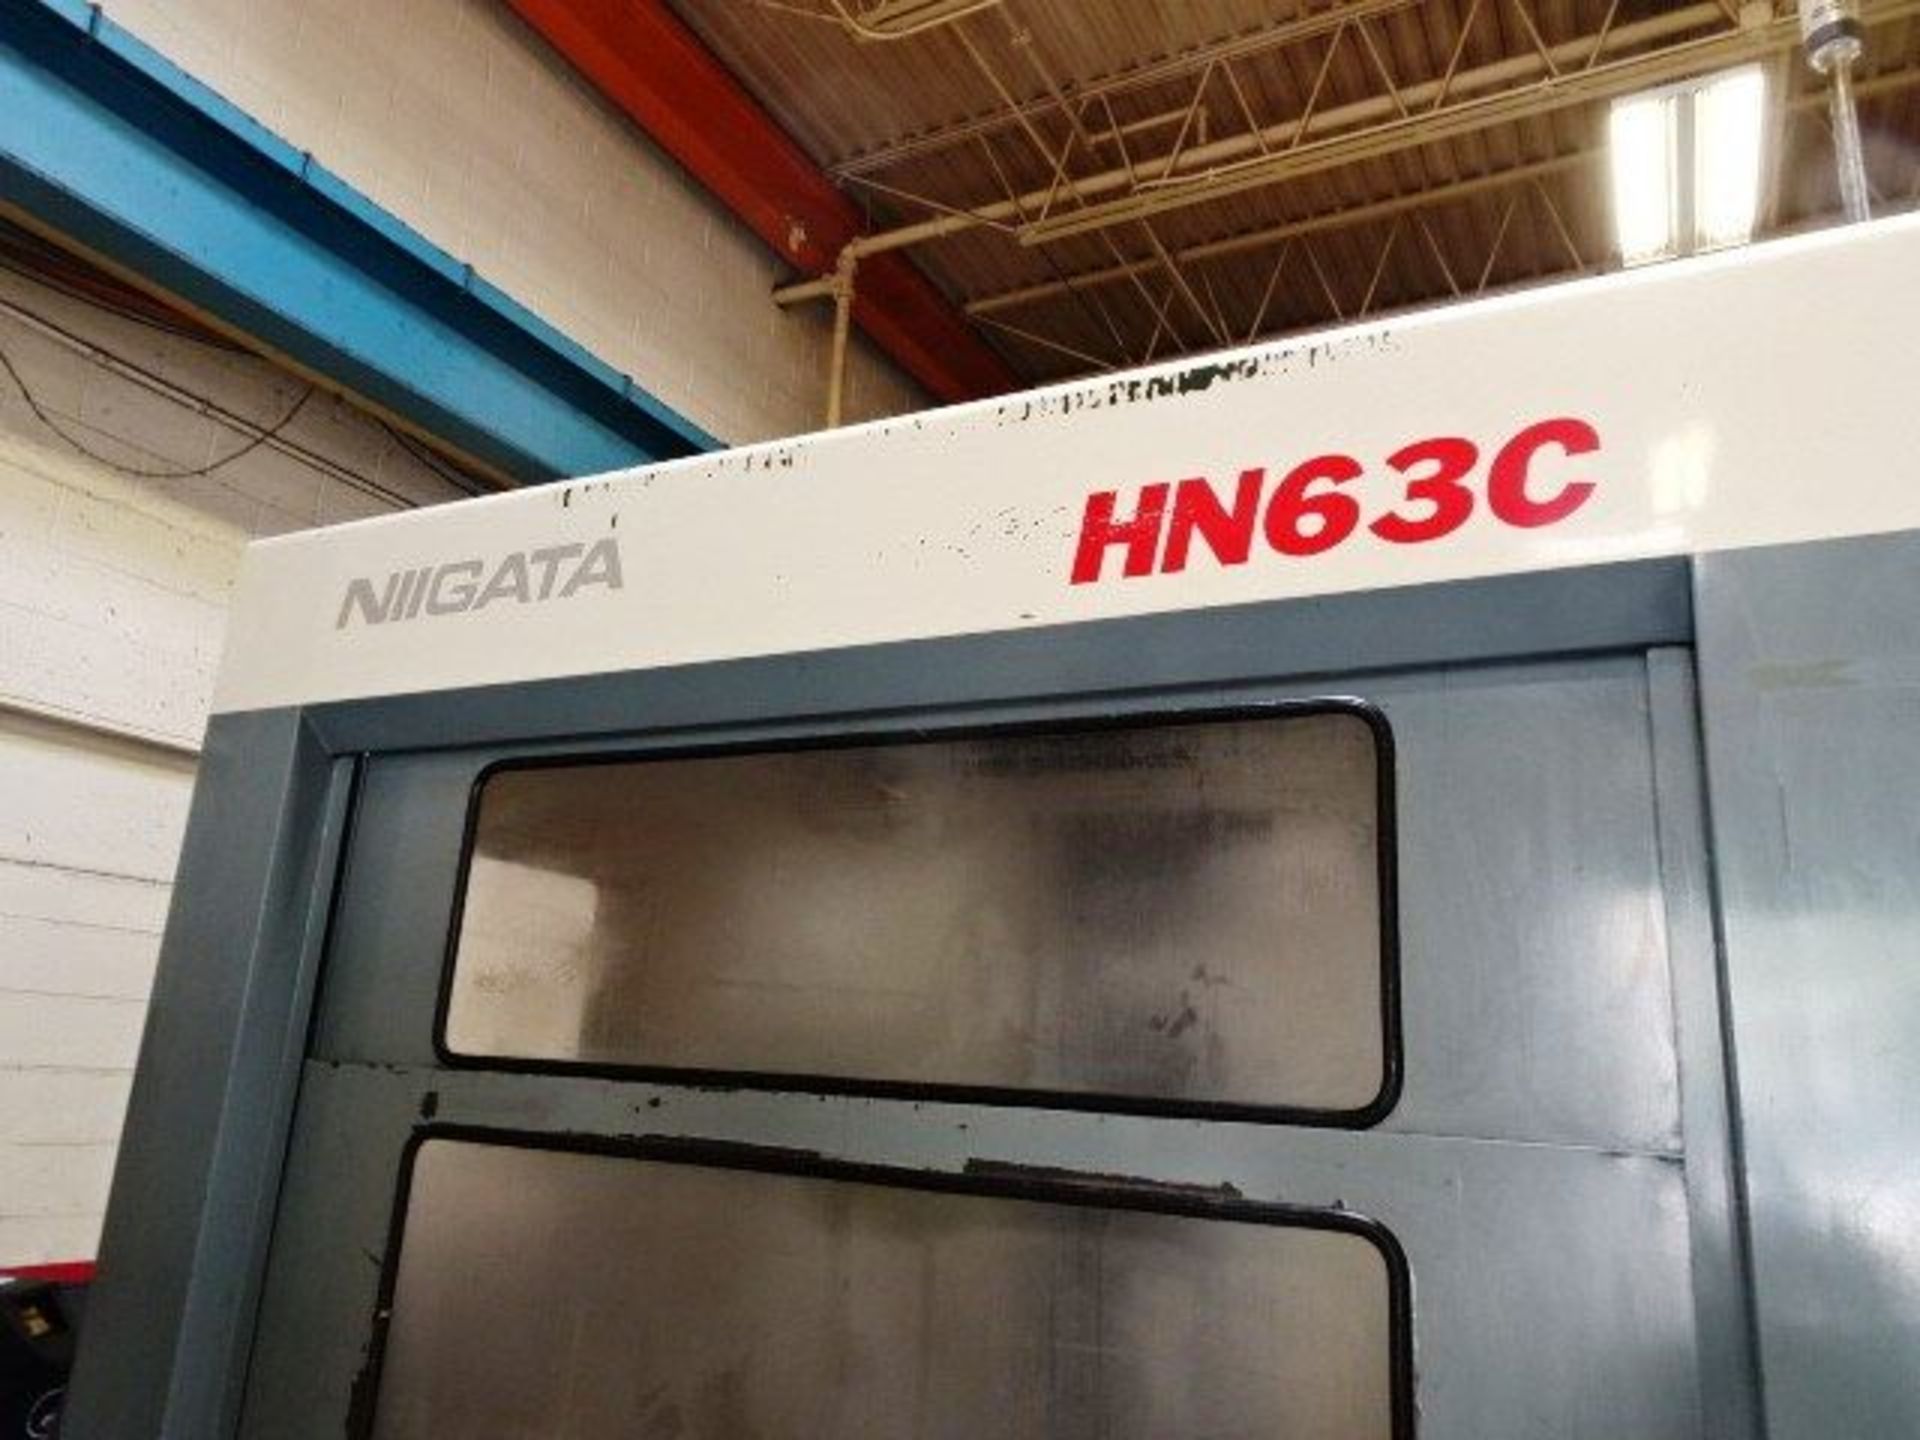 24.8"X24.8" NIIGATA HN63C 4-AXIS CNC HORIZONTAL MACHINING CENTER, S/N 26716, NEW 1996 - Image 7 of 7